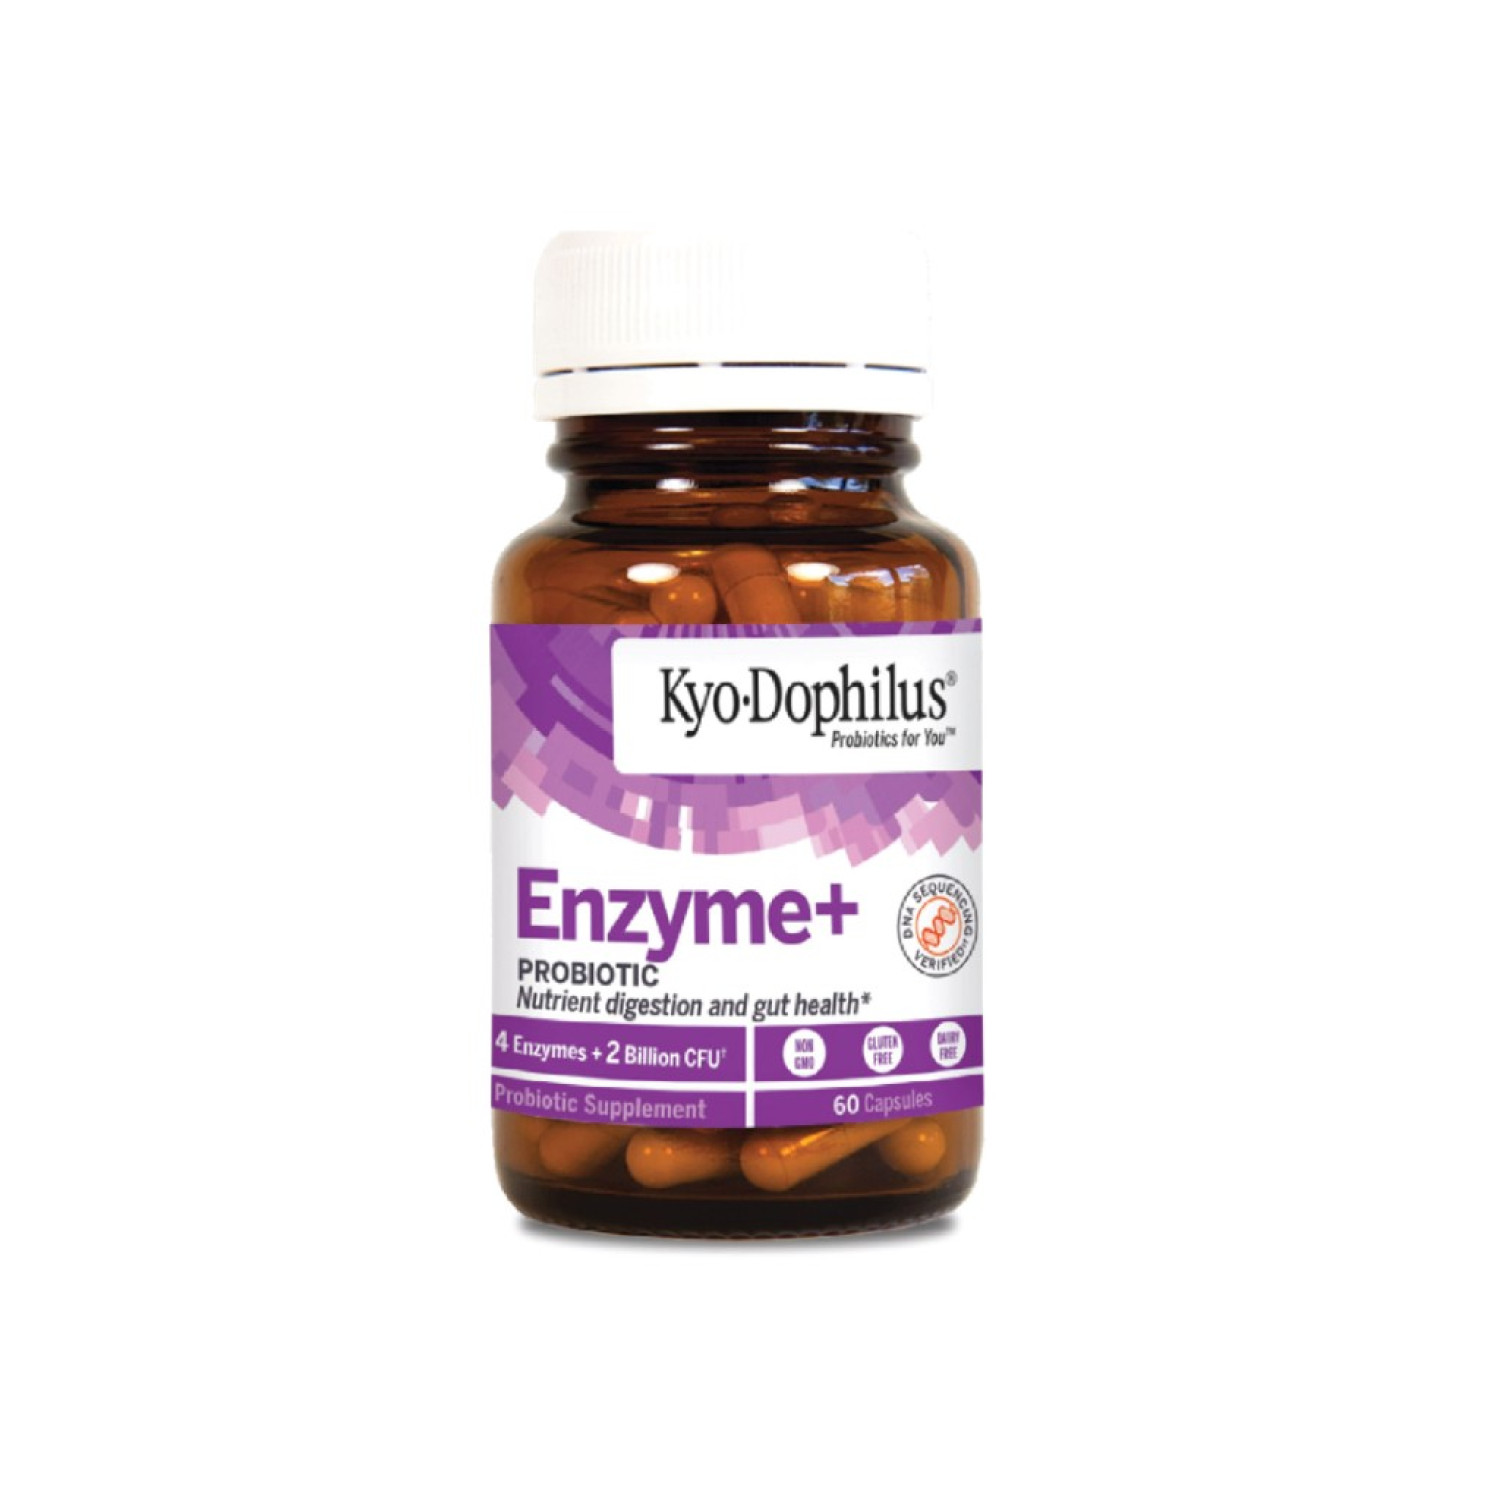 Kyolic Kyolic Dophilus With Enzymes + Probiotic